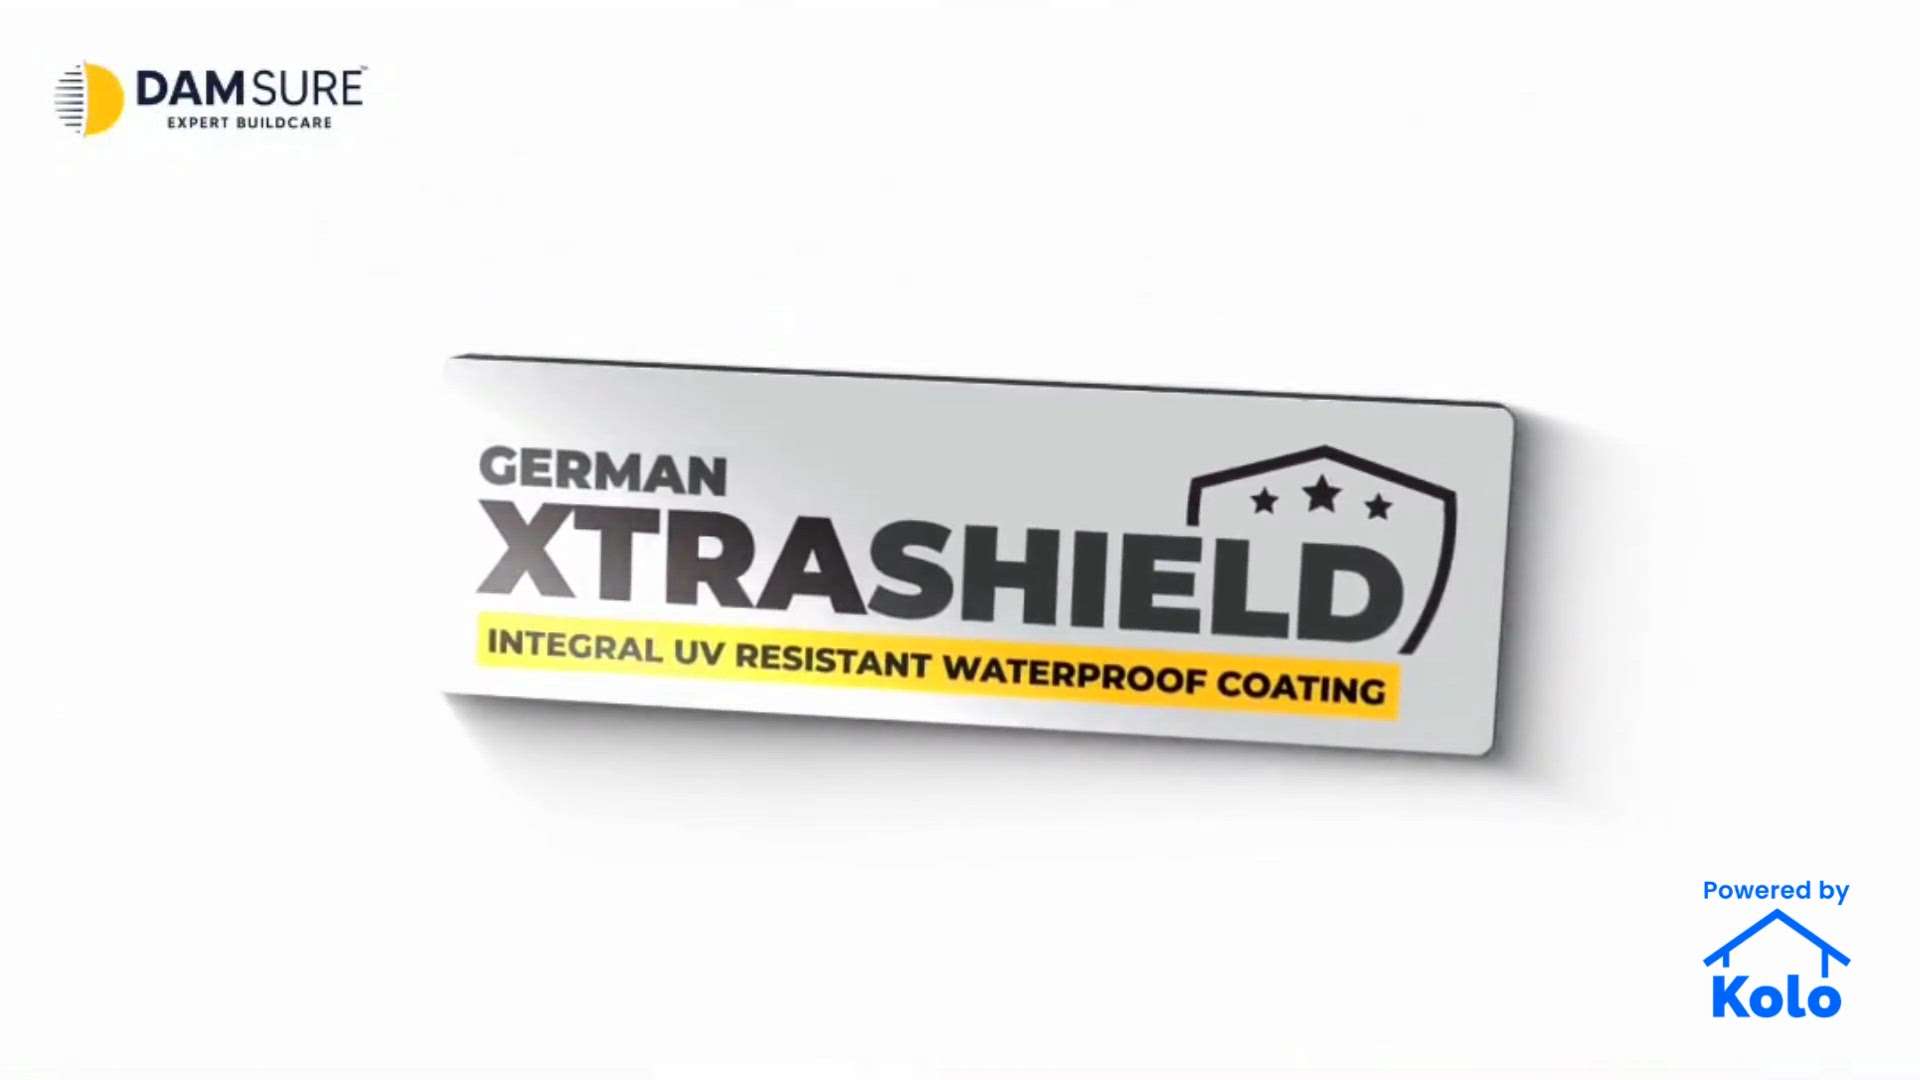 Features of German Xtrashield
.
.
.
#damsure  #damsureproducts #damsurewaterproofing